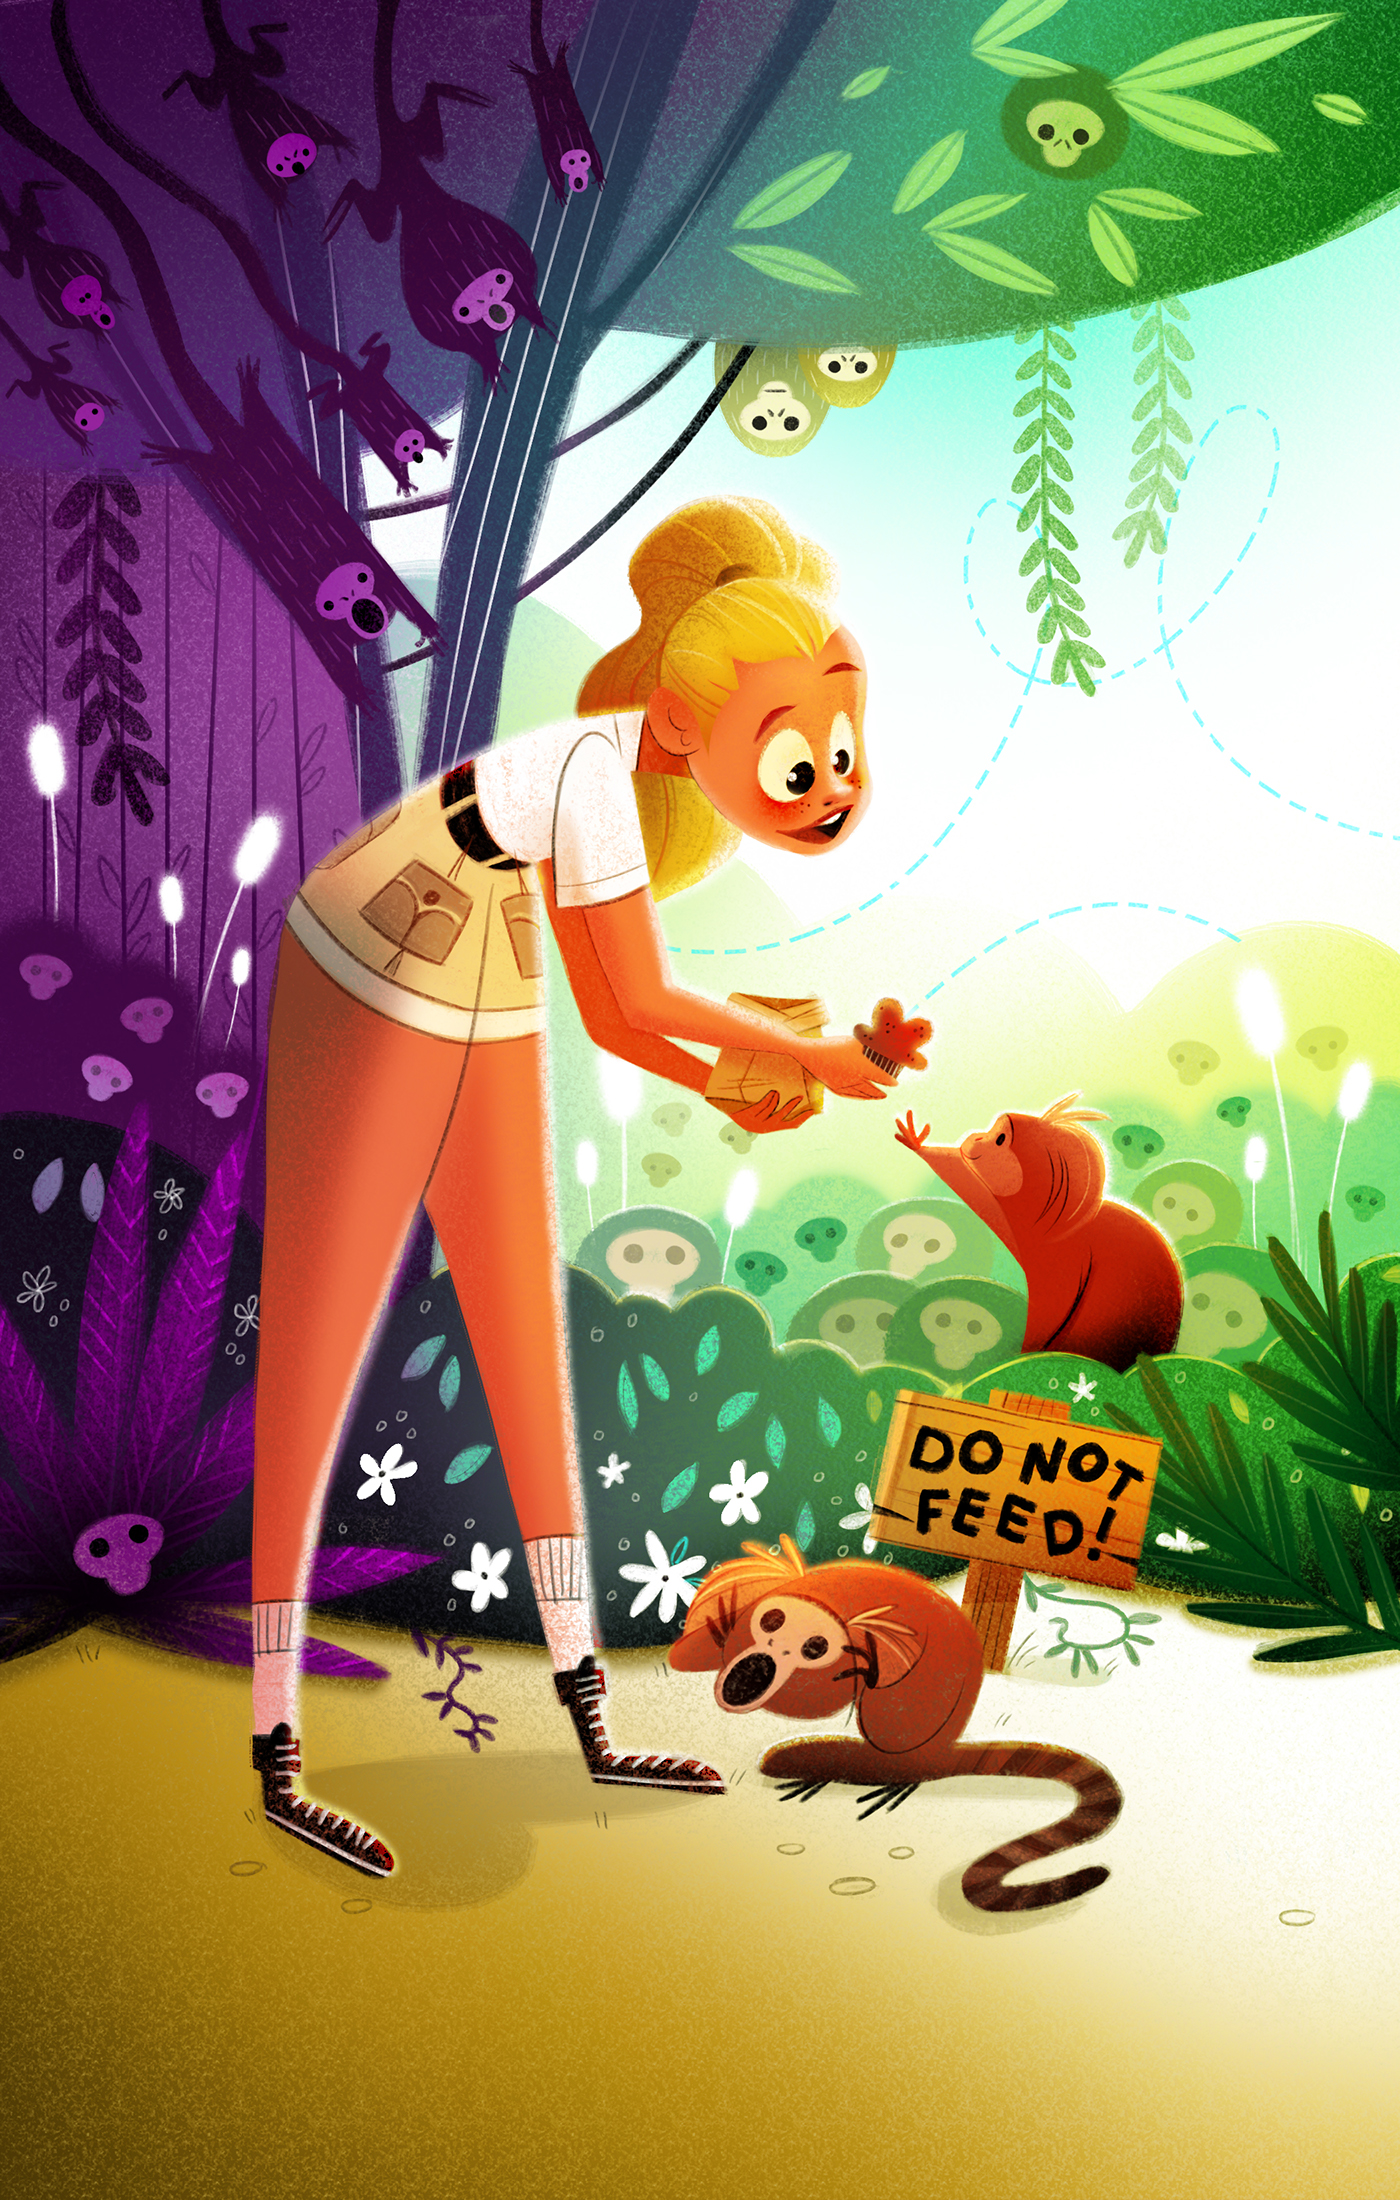 childrensbooks Marmoset muffin jungle Brazil exploring visualdevelopment monkey donotfeed girl